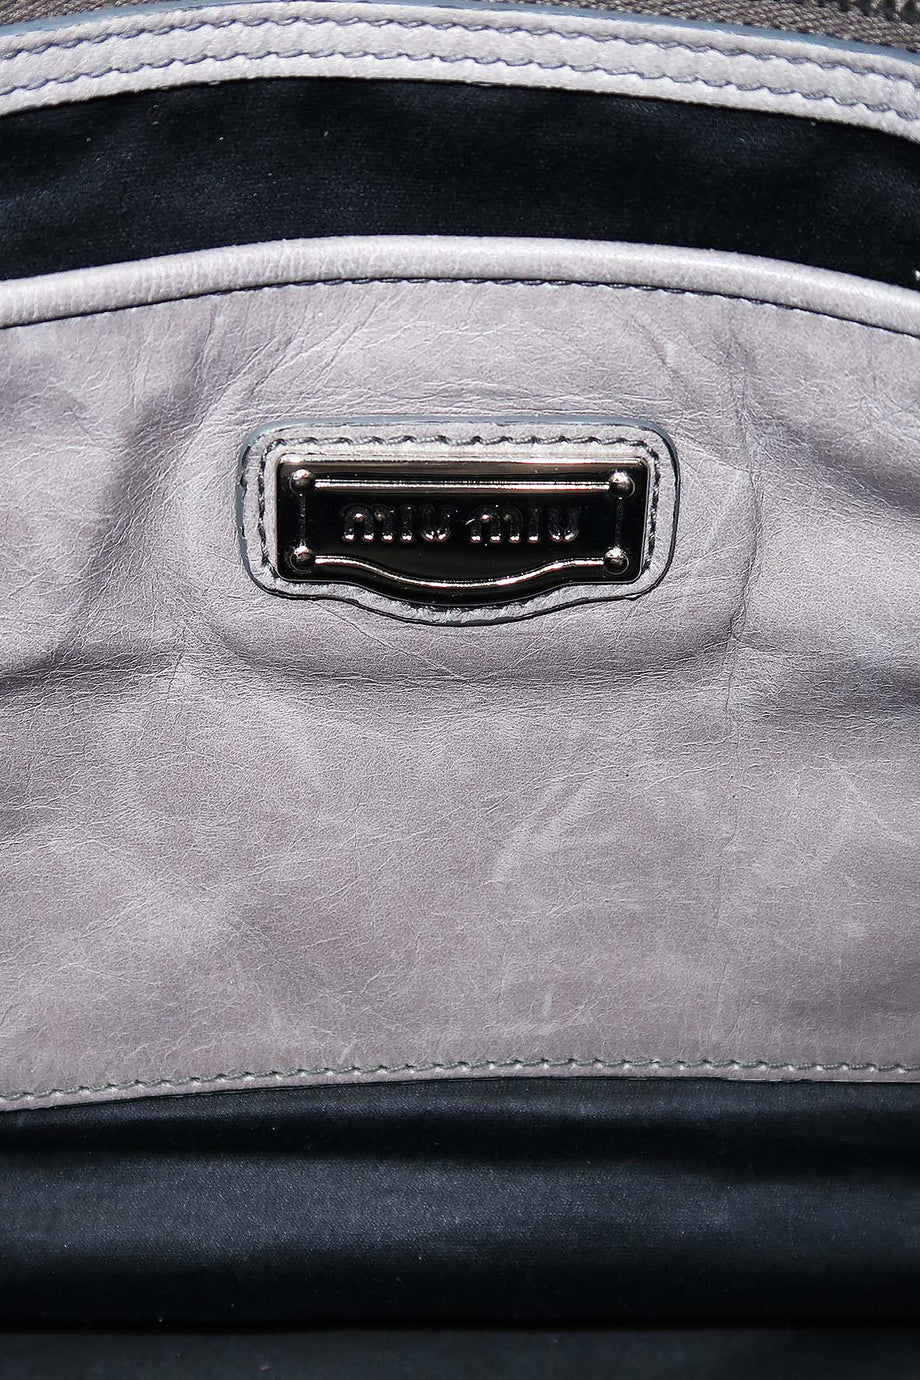 MIU MIU Vitello Lux Mini Bow Bag Grey 584617